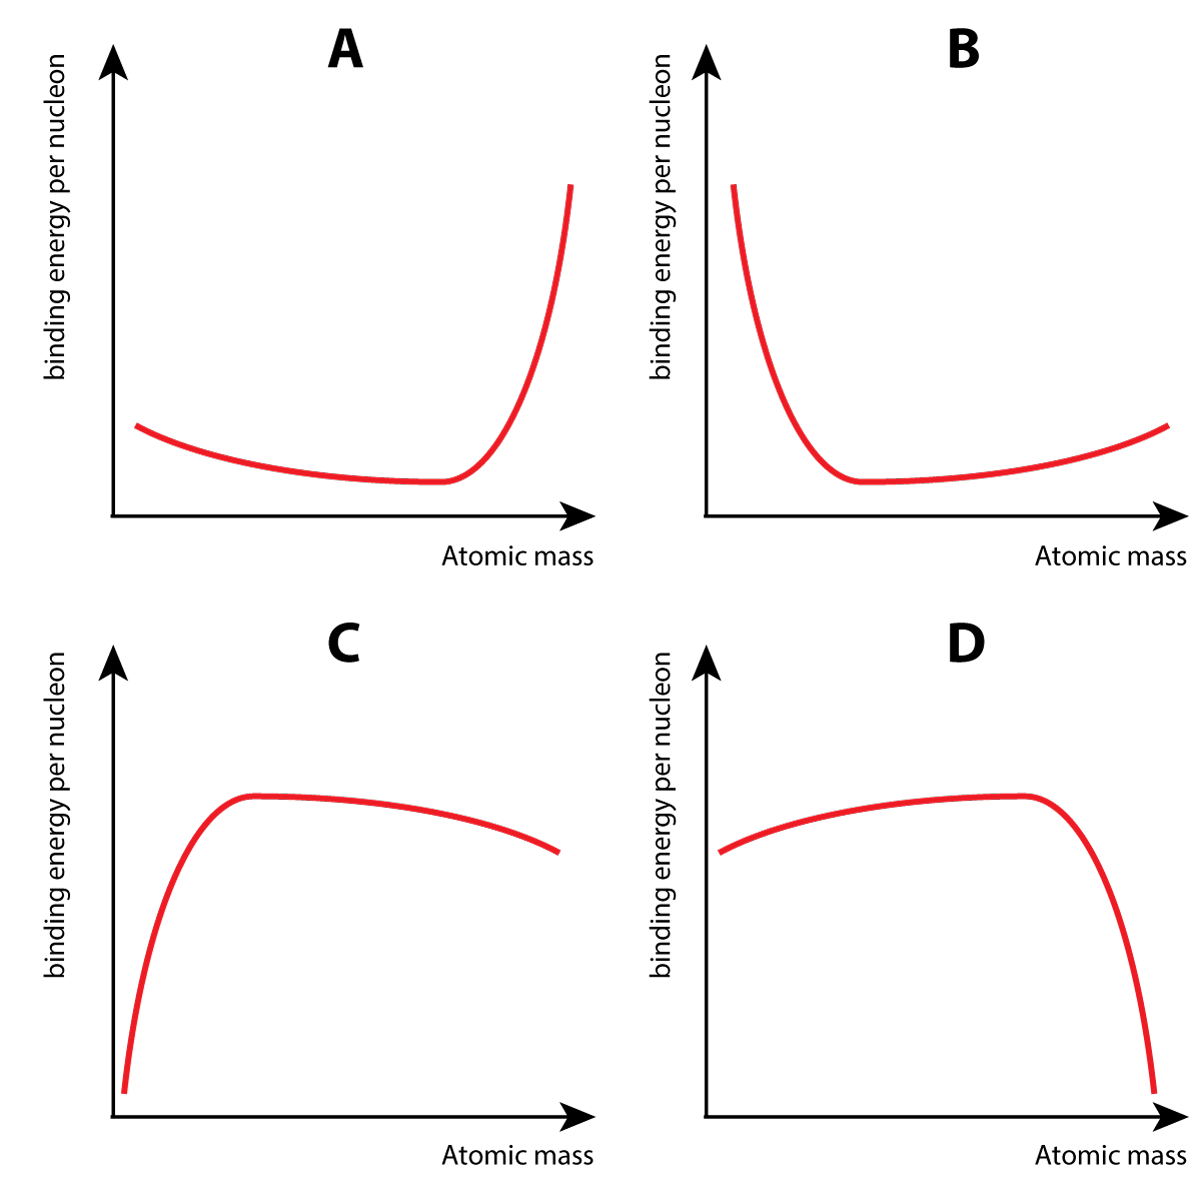 Binding energy graph x4